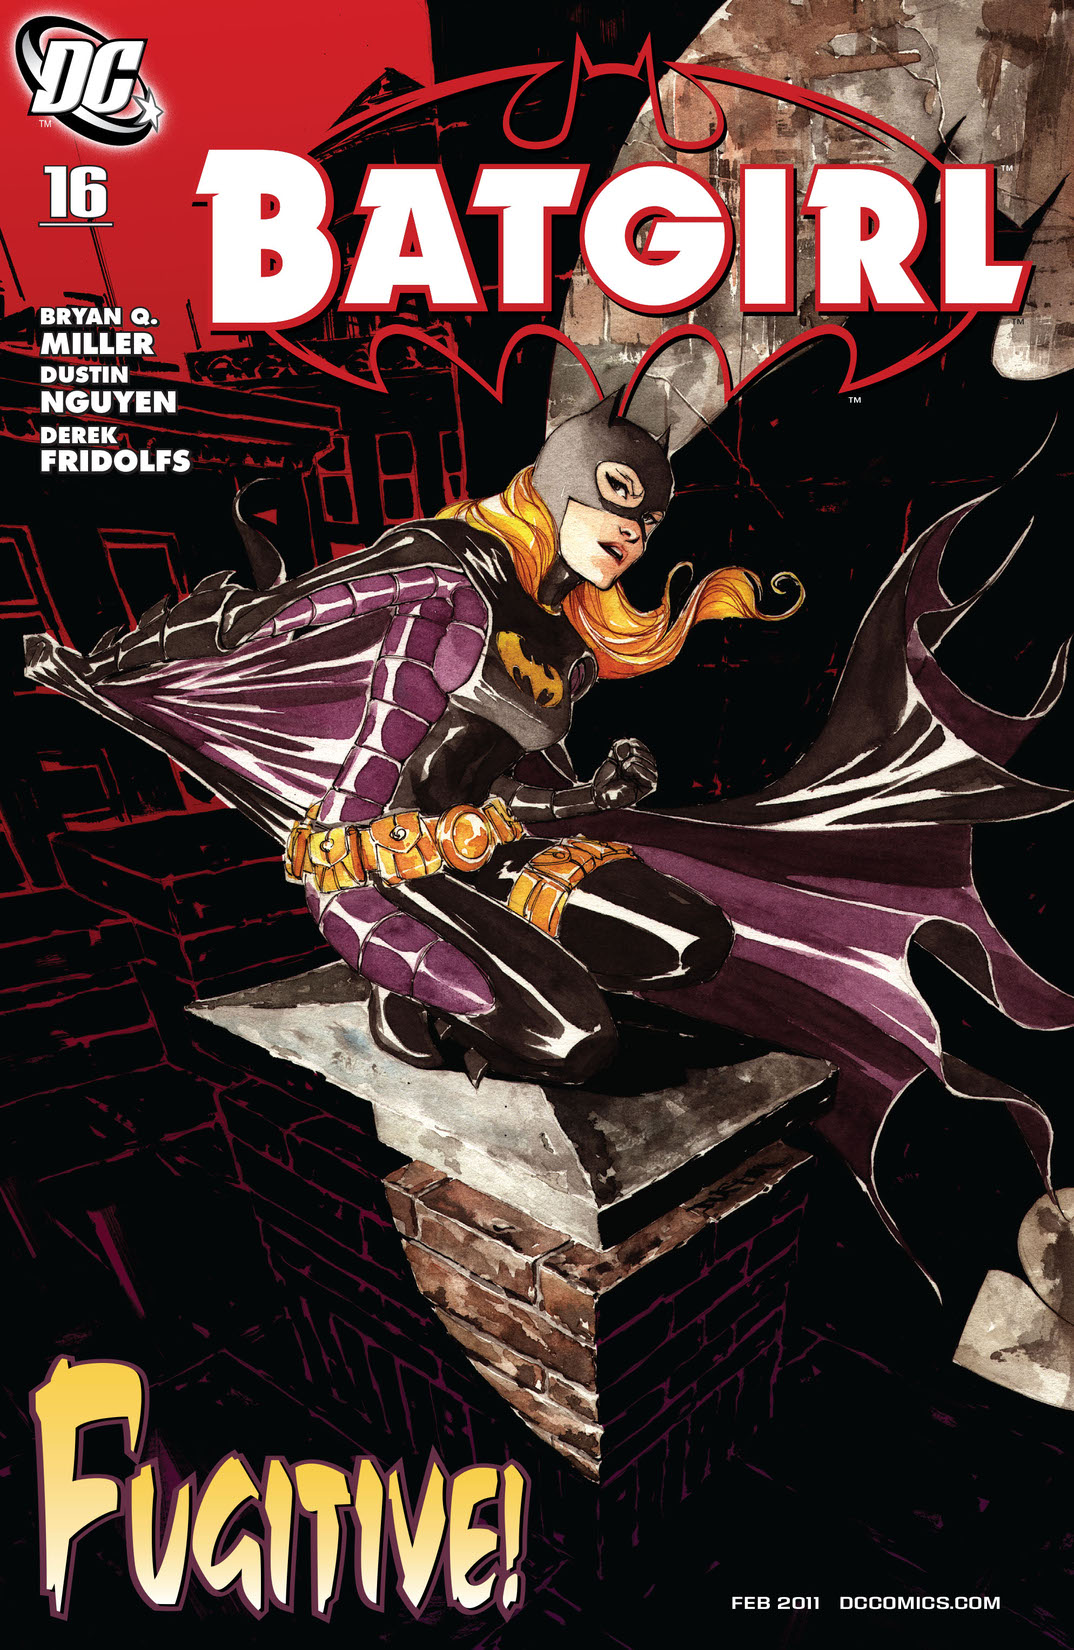 Batgirl (2009-) #16 preview images